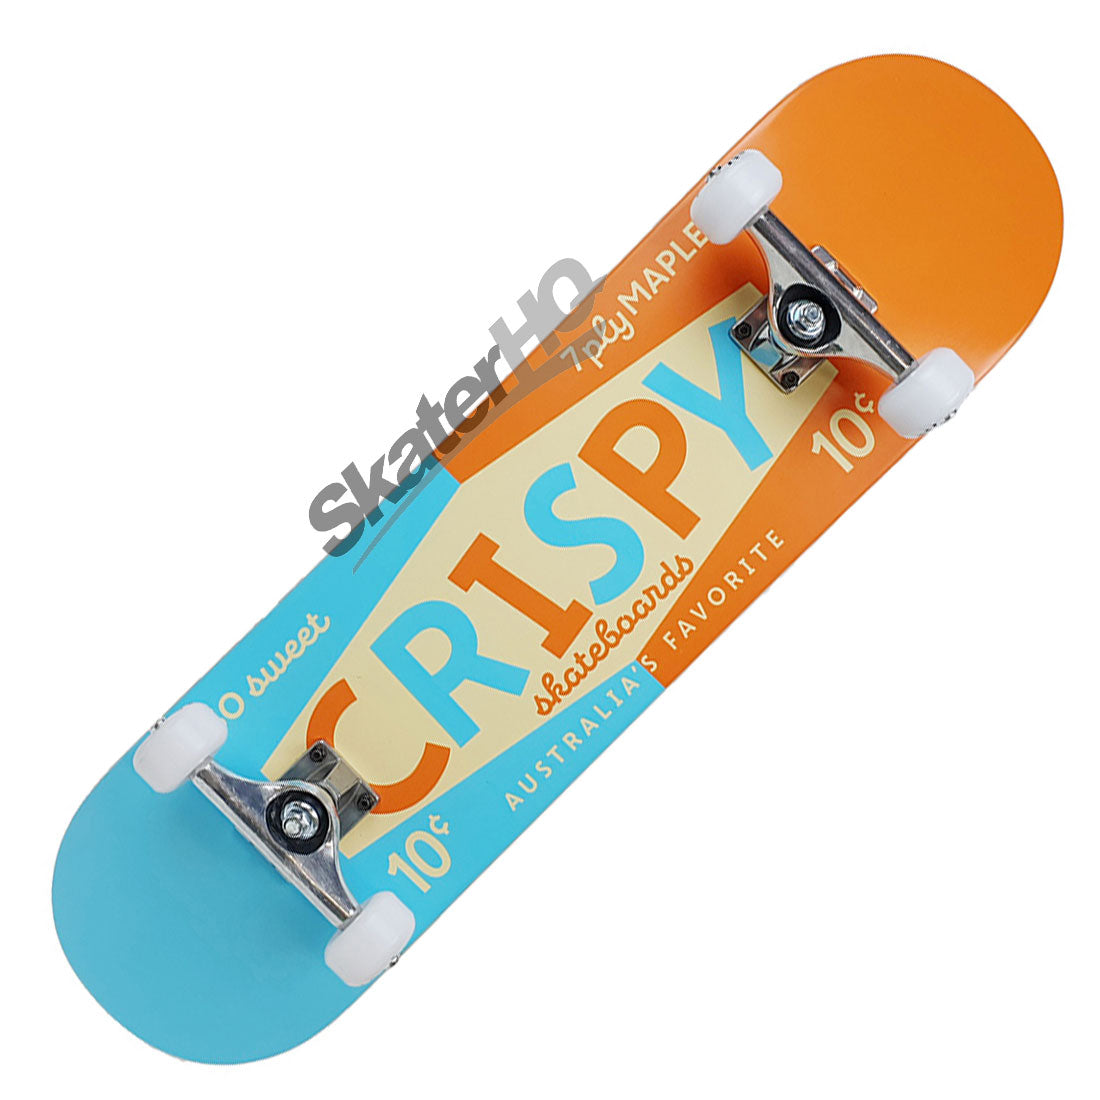 Crispy Rookie So Sweet 8.25 Complete - Blue/Orange Skateboard Completes Modern Street